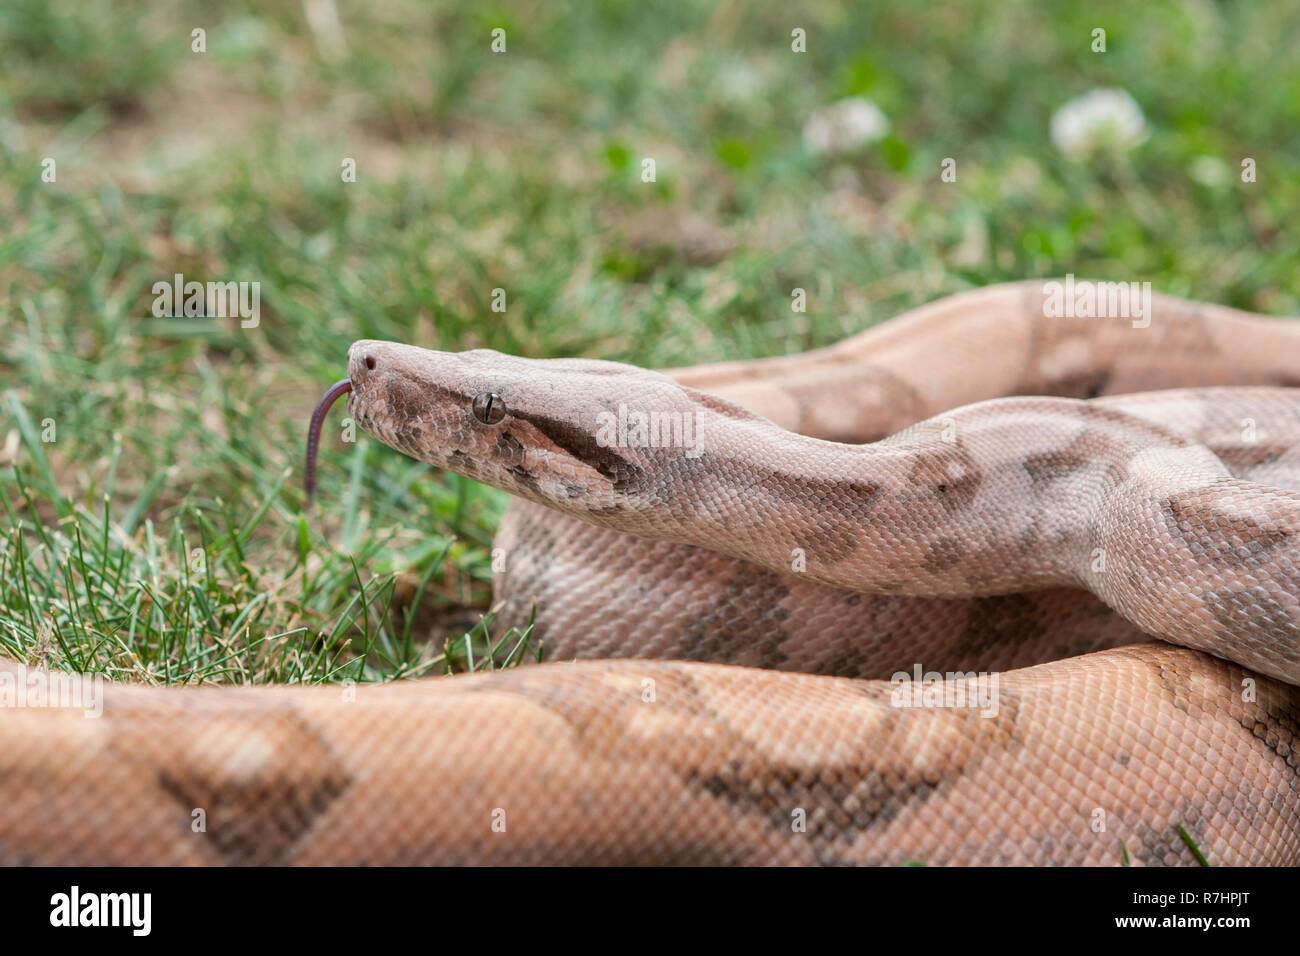 A snake flicking its tongue Stock Photo